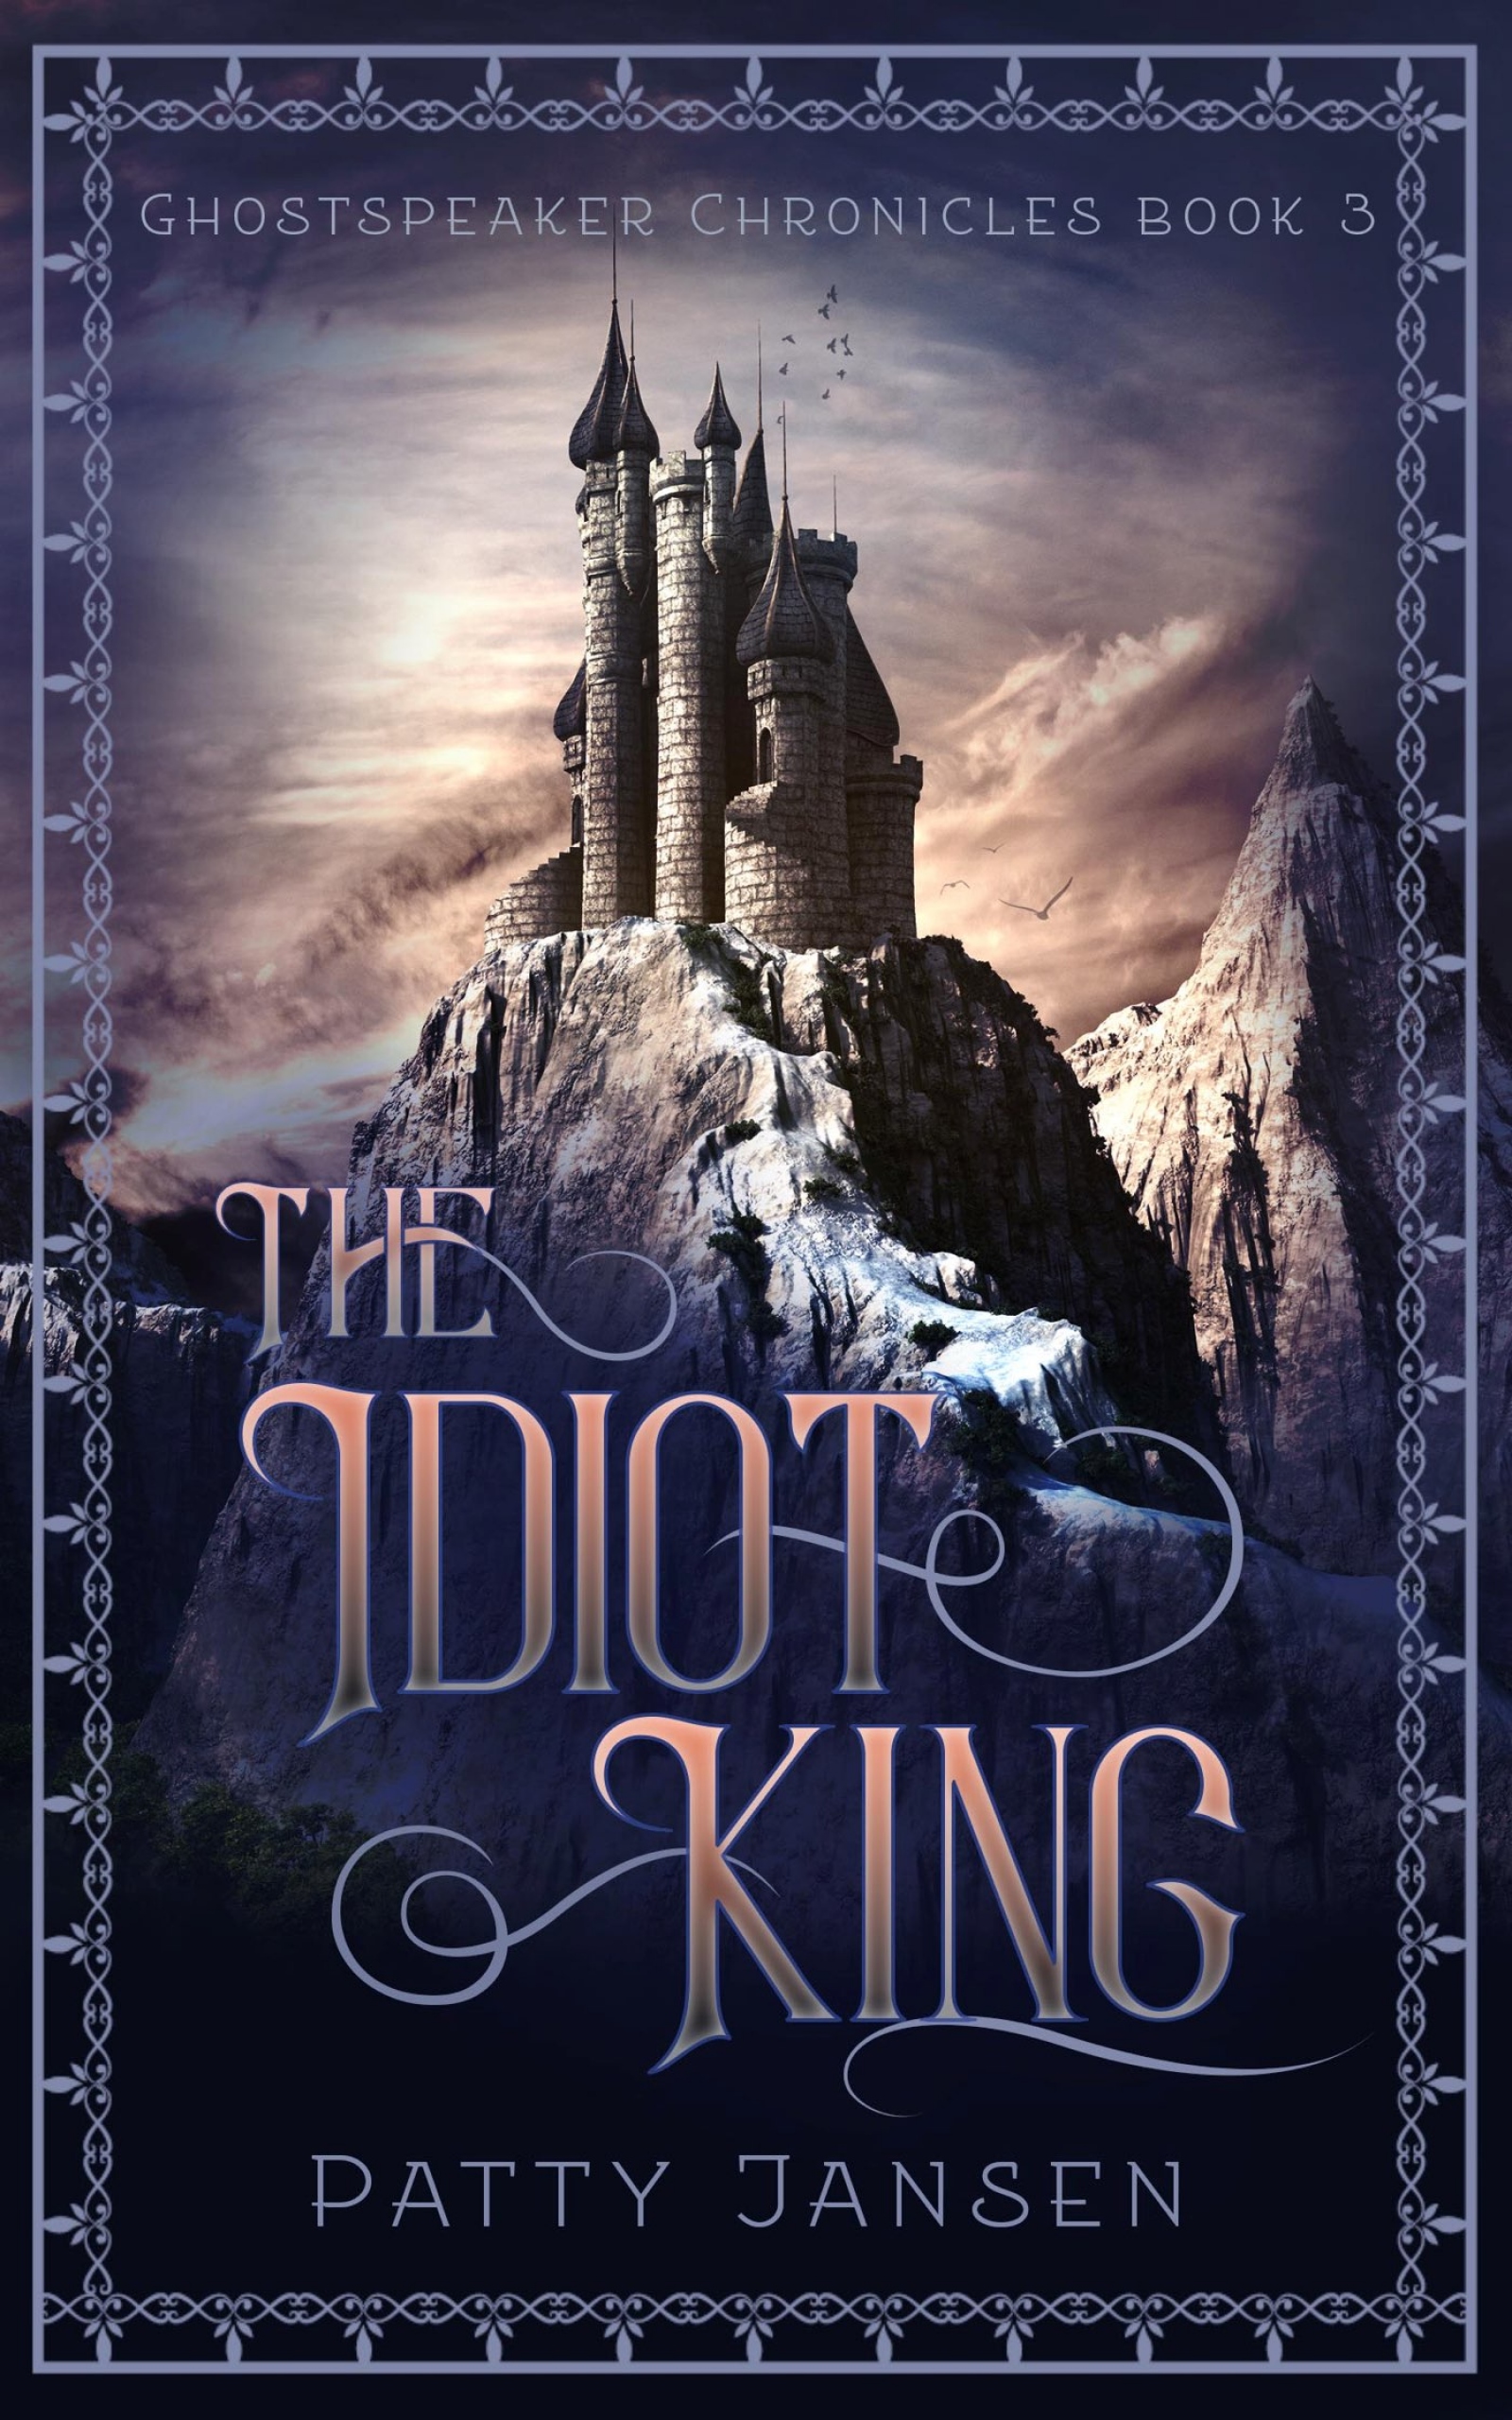 The Idiot King